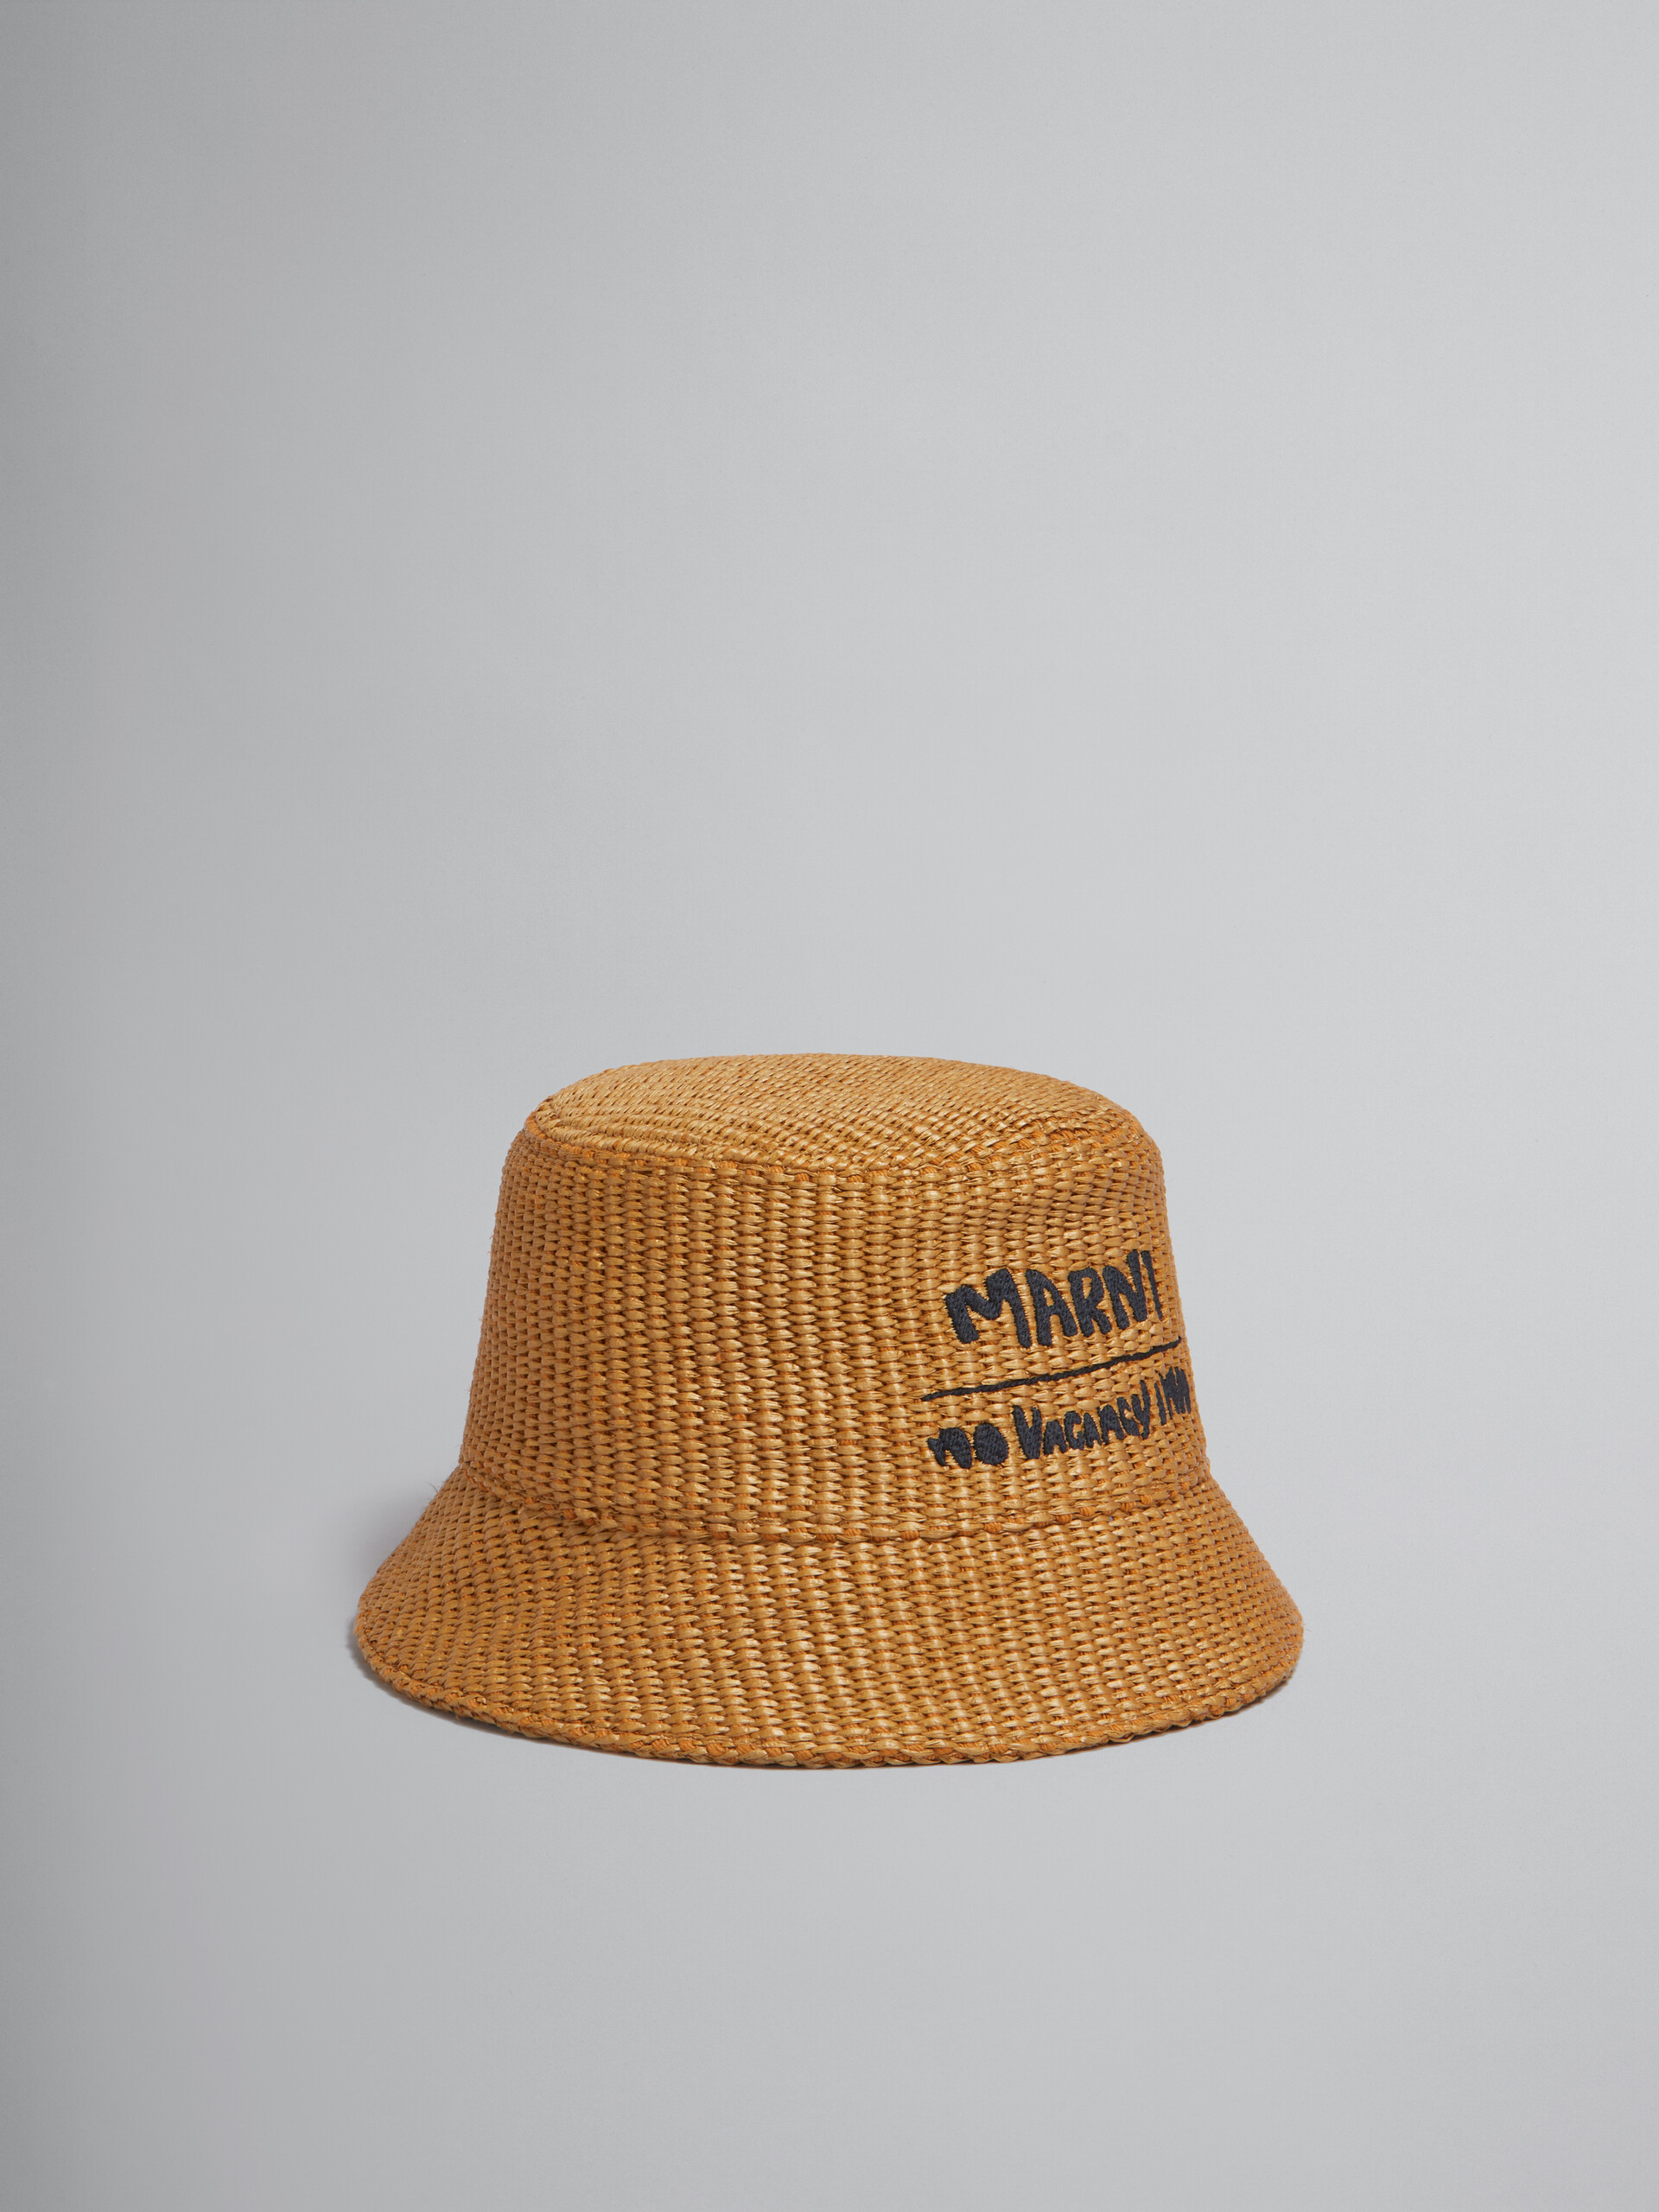 Marni x No Vacancy Inn - Caramel hat in raffia fabric - Hats - Image 1